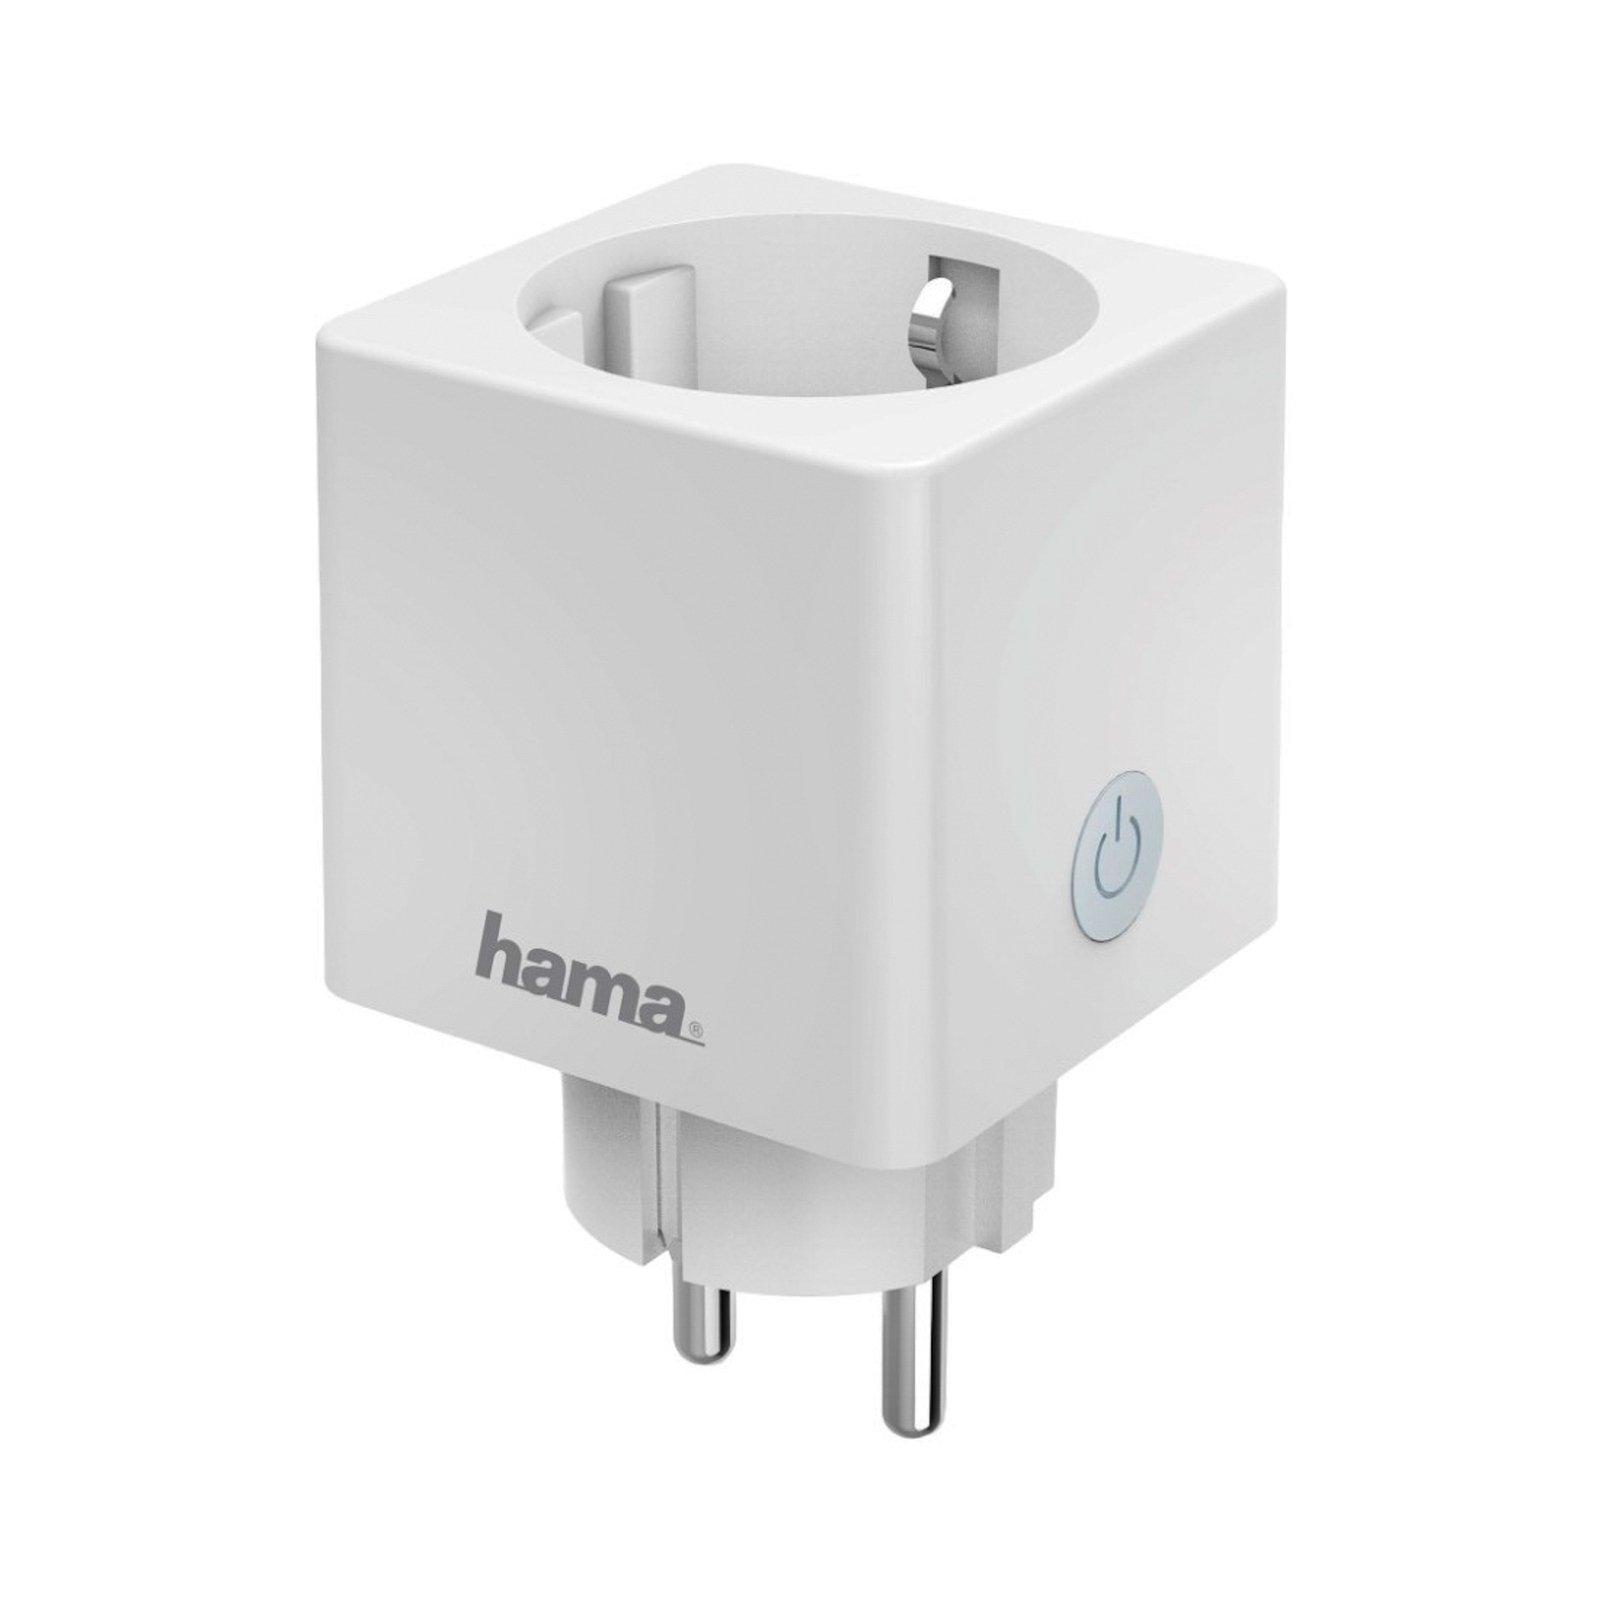 Hama Mini WLAN-pistorasia virtalaskuri/sovellusohj